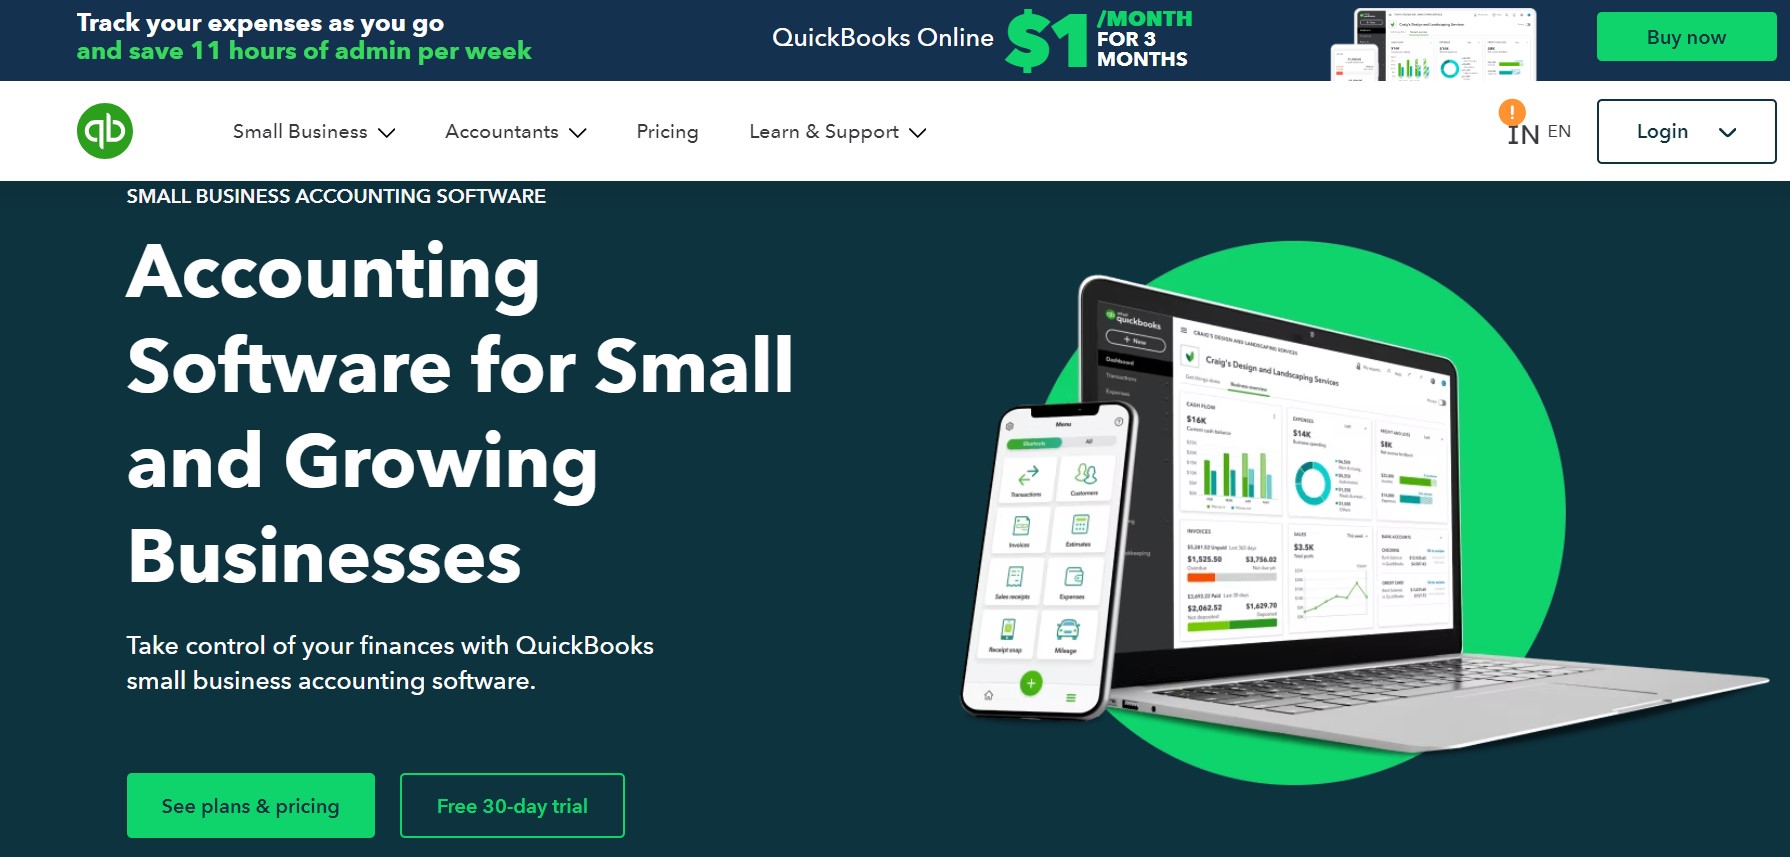 Quickbooks homepage